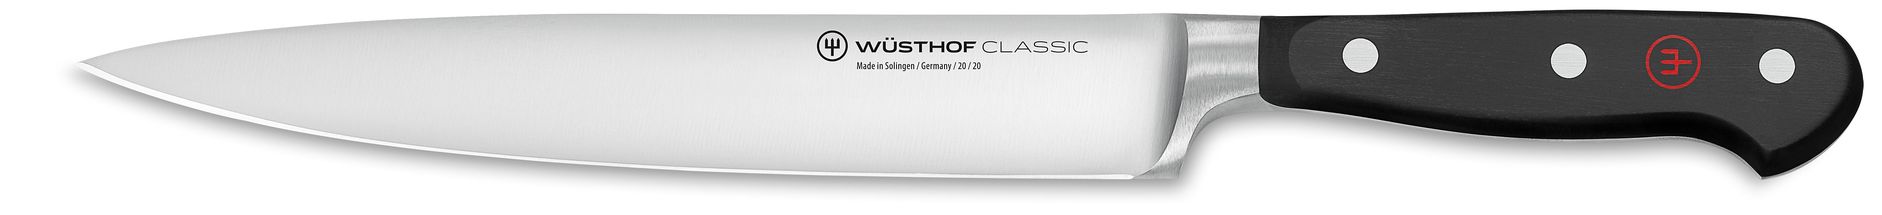 Wusthof Carving Knife Classic 20 cm